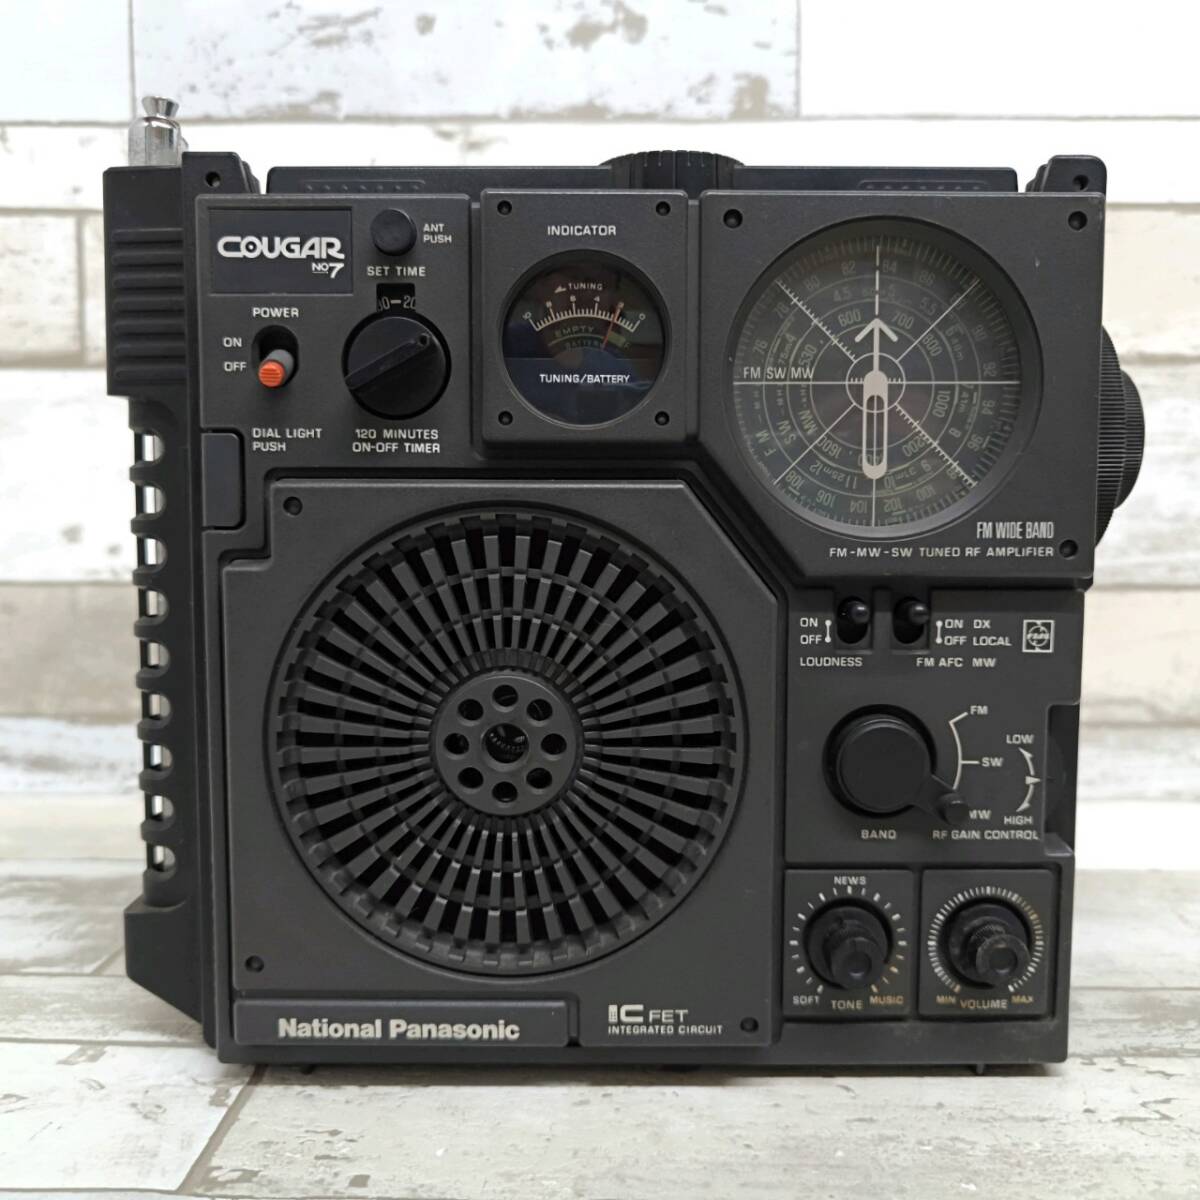 National Panasonic ナショナル パナソニック RF-877 COUGAR No.7 クーガー BCLラジオの画像1